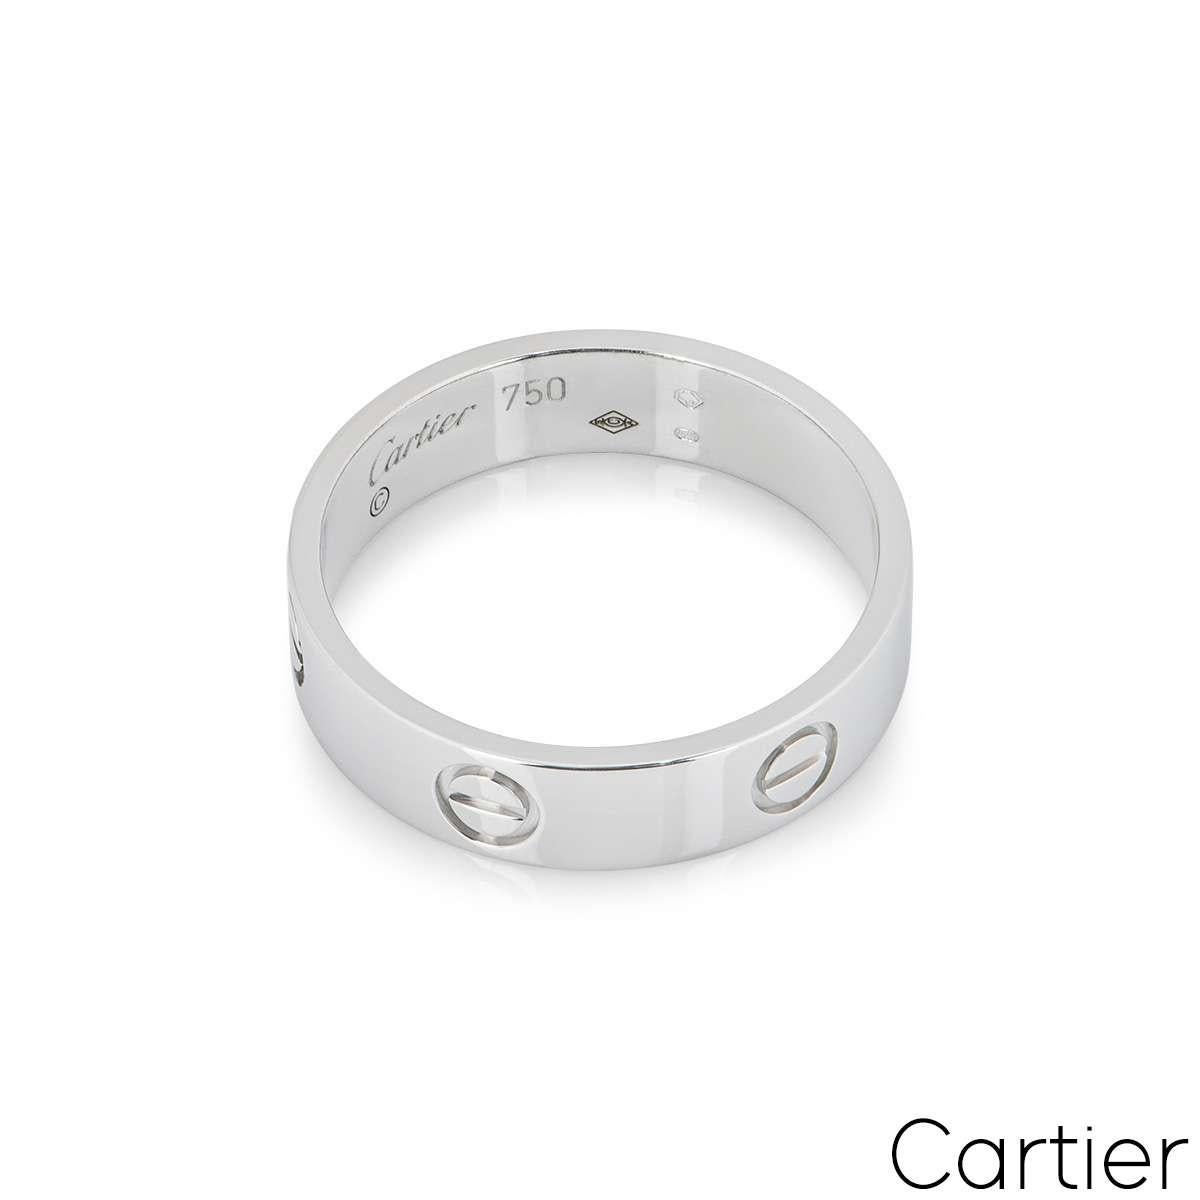 Women's Cartier White Gold Plain Love Ring Size 53 B4084700 For Sale